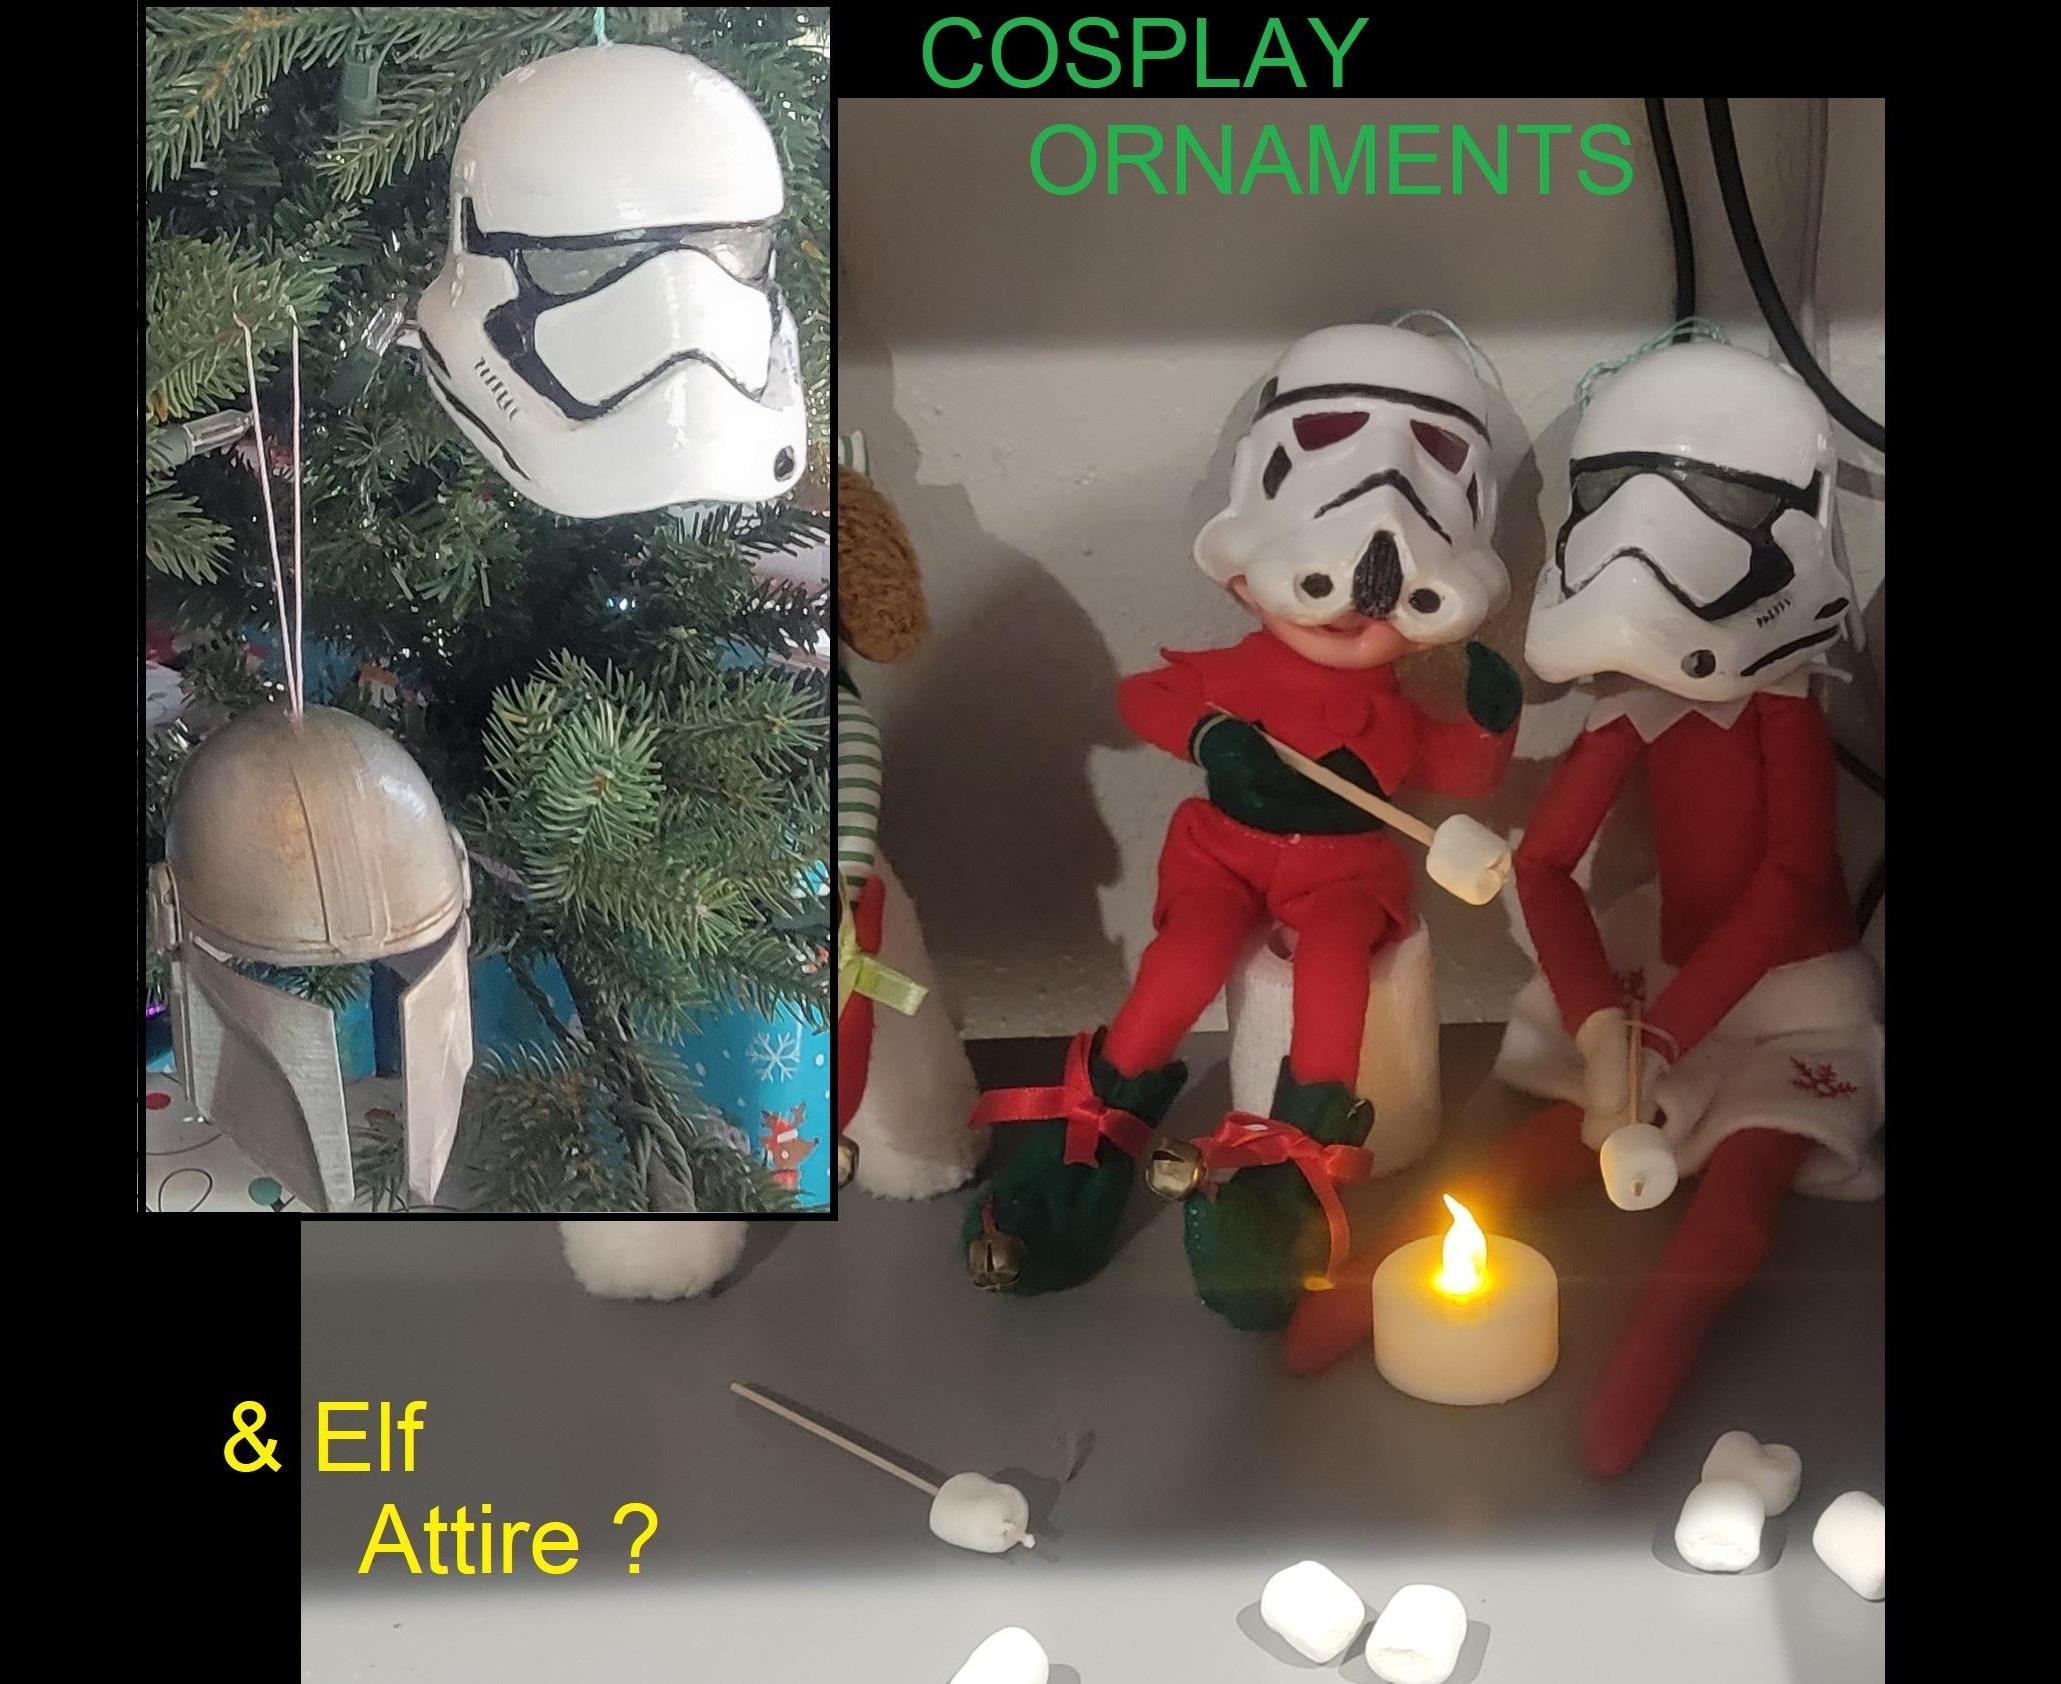 Cosplay Ornaments / Elf Attire?